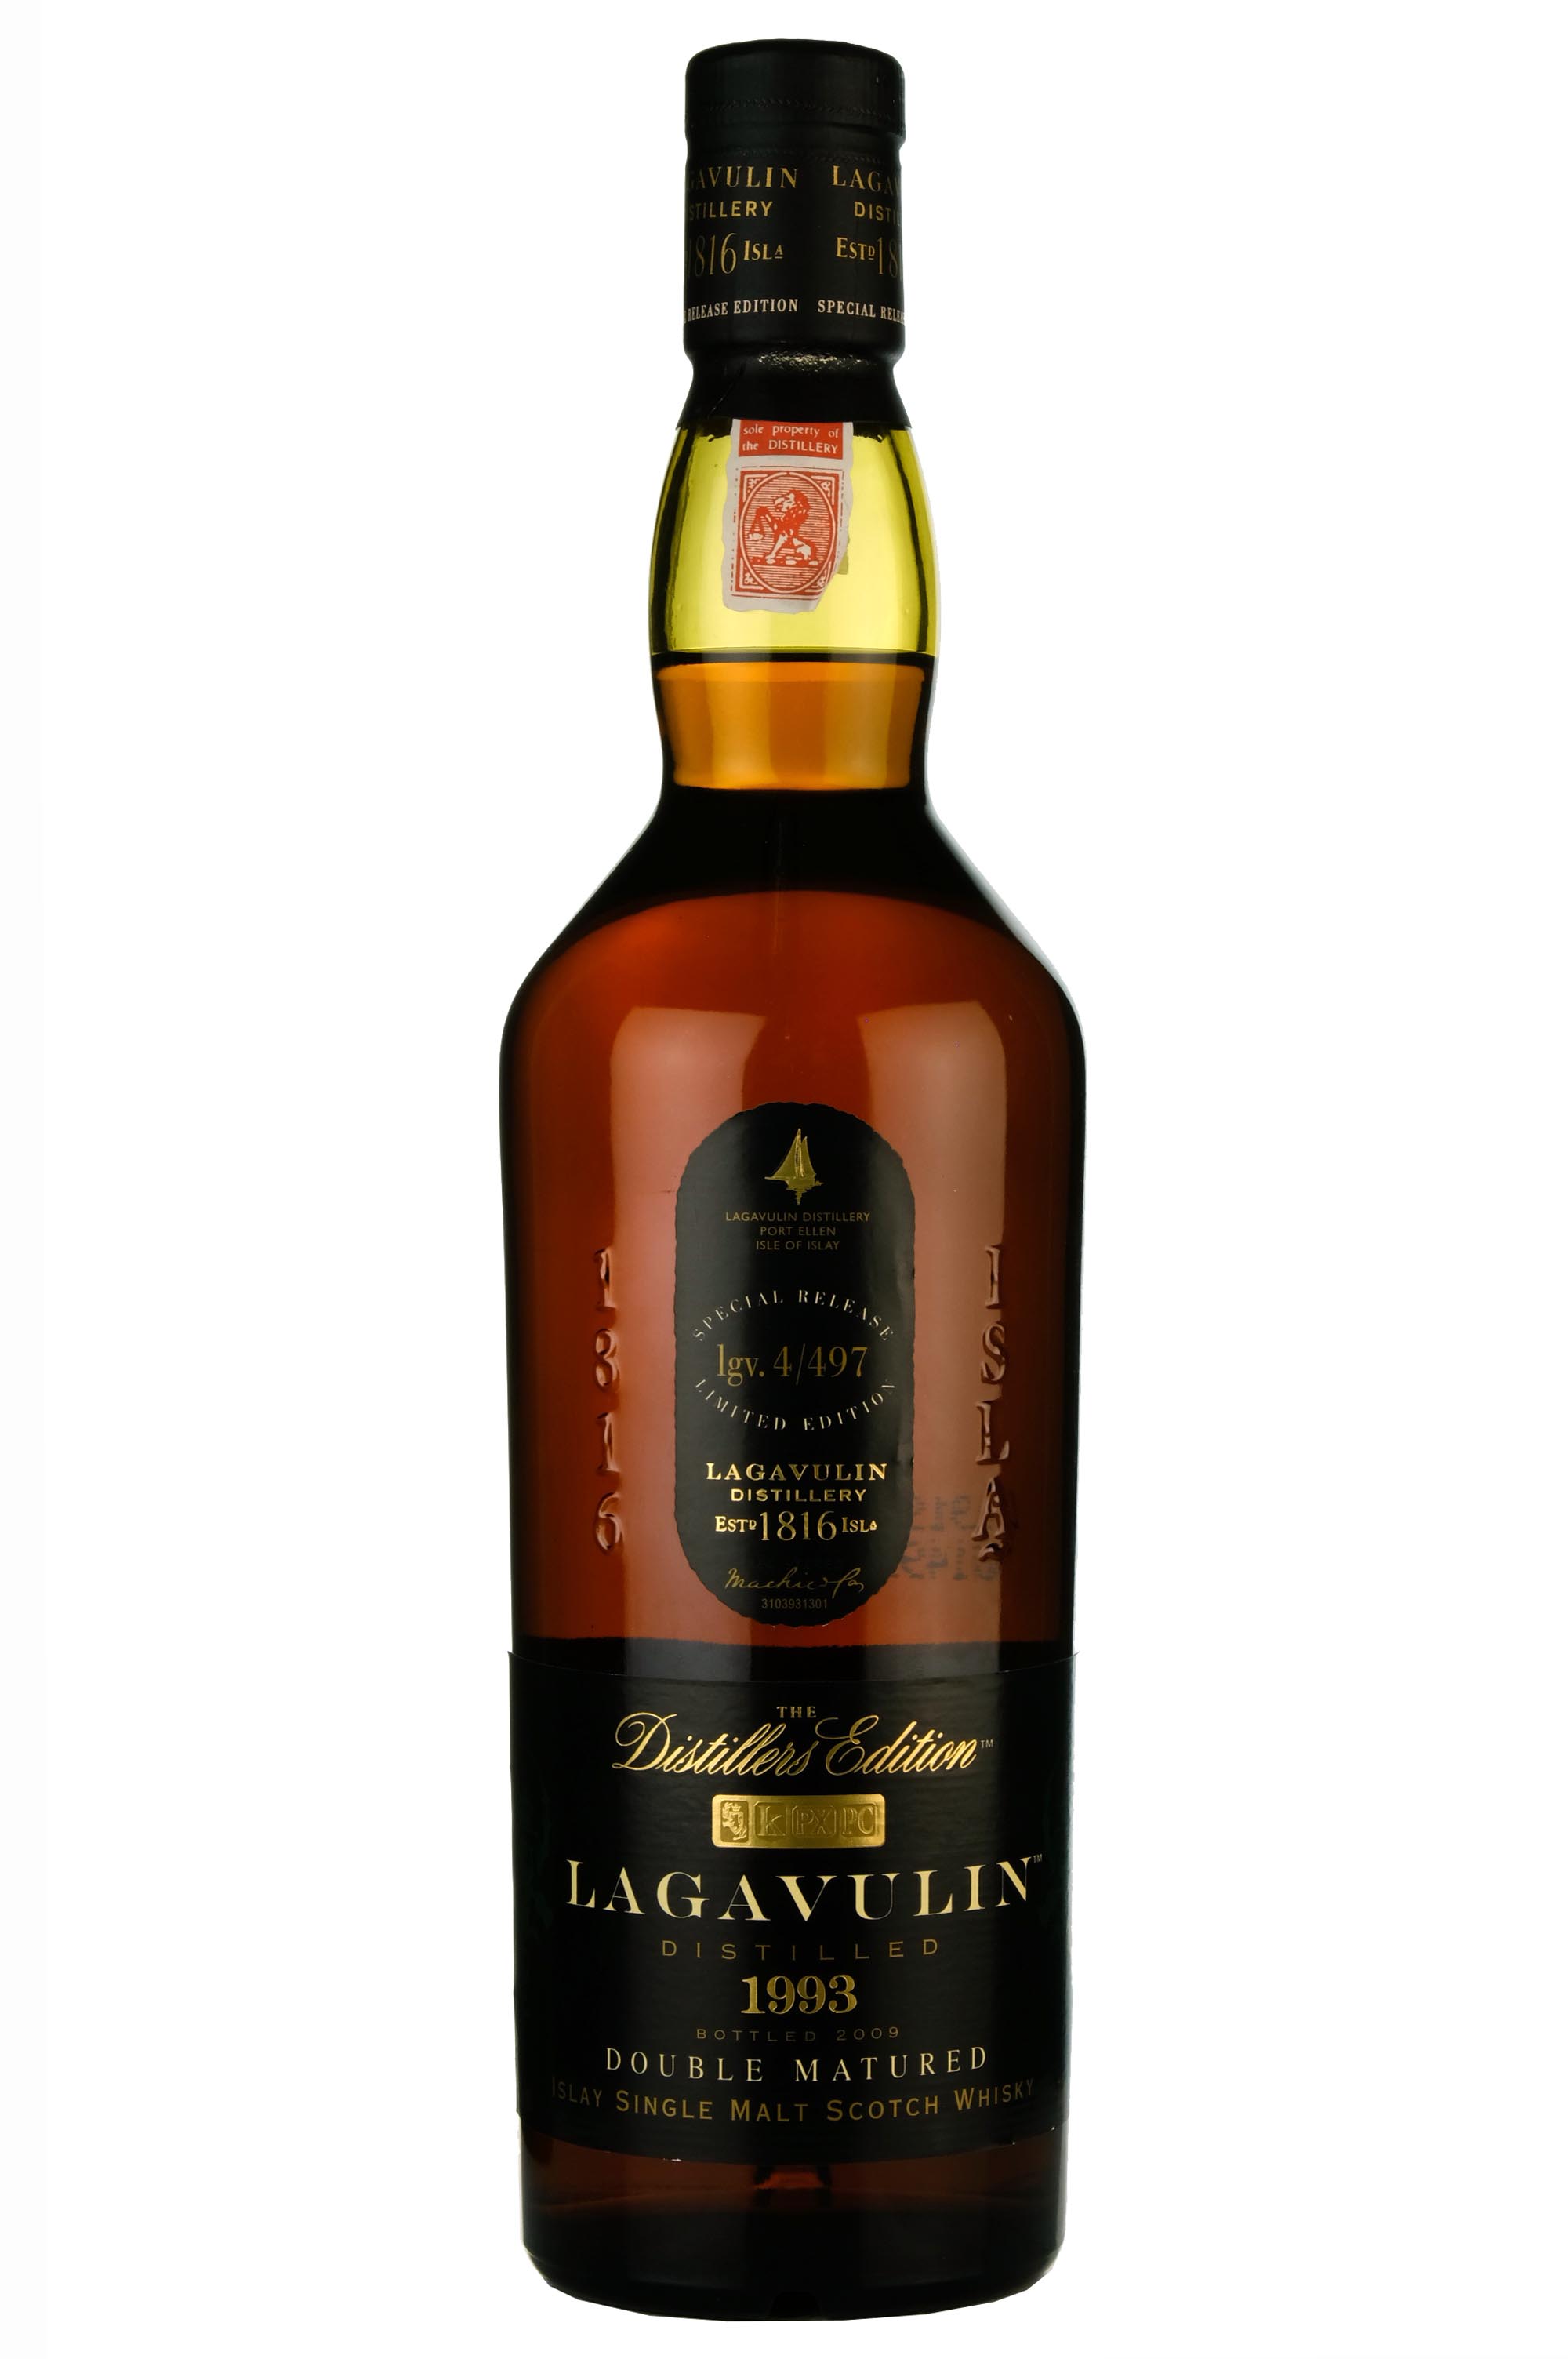 Lagavulin Distillers Edition Single Malt Whisky 70cl